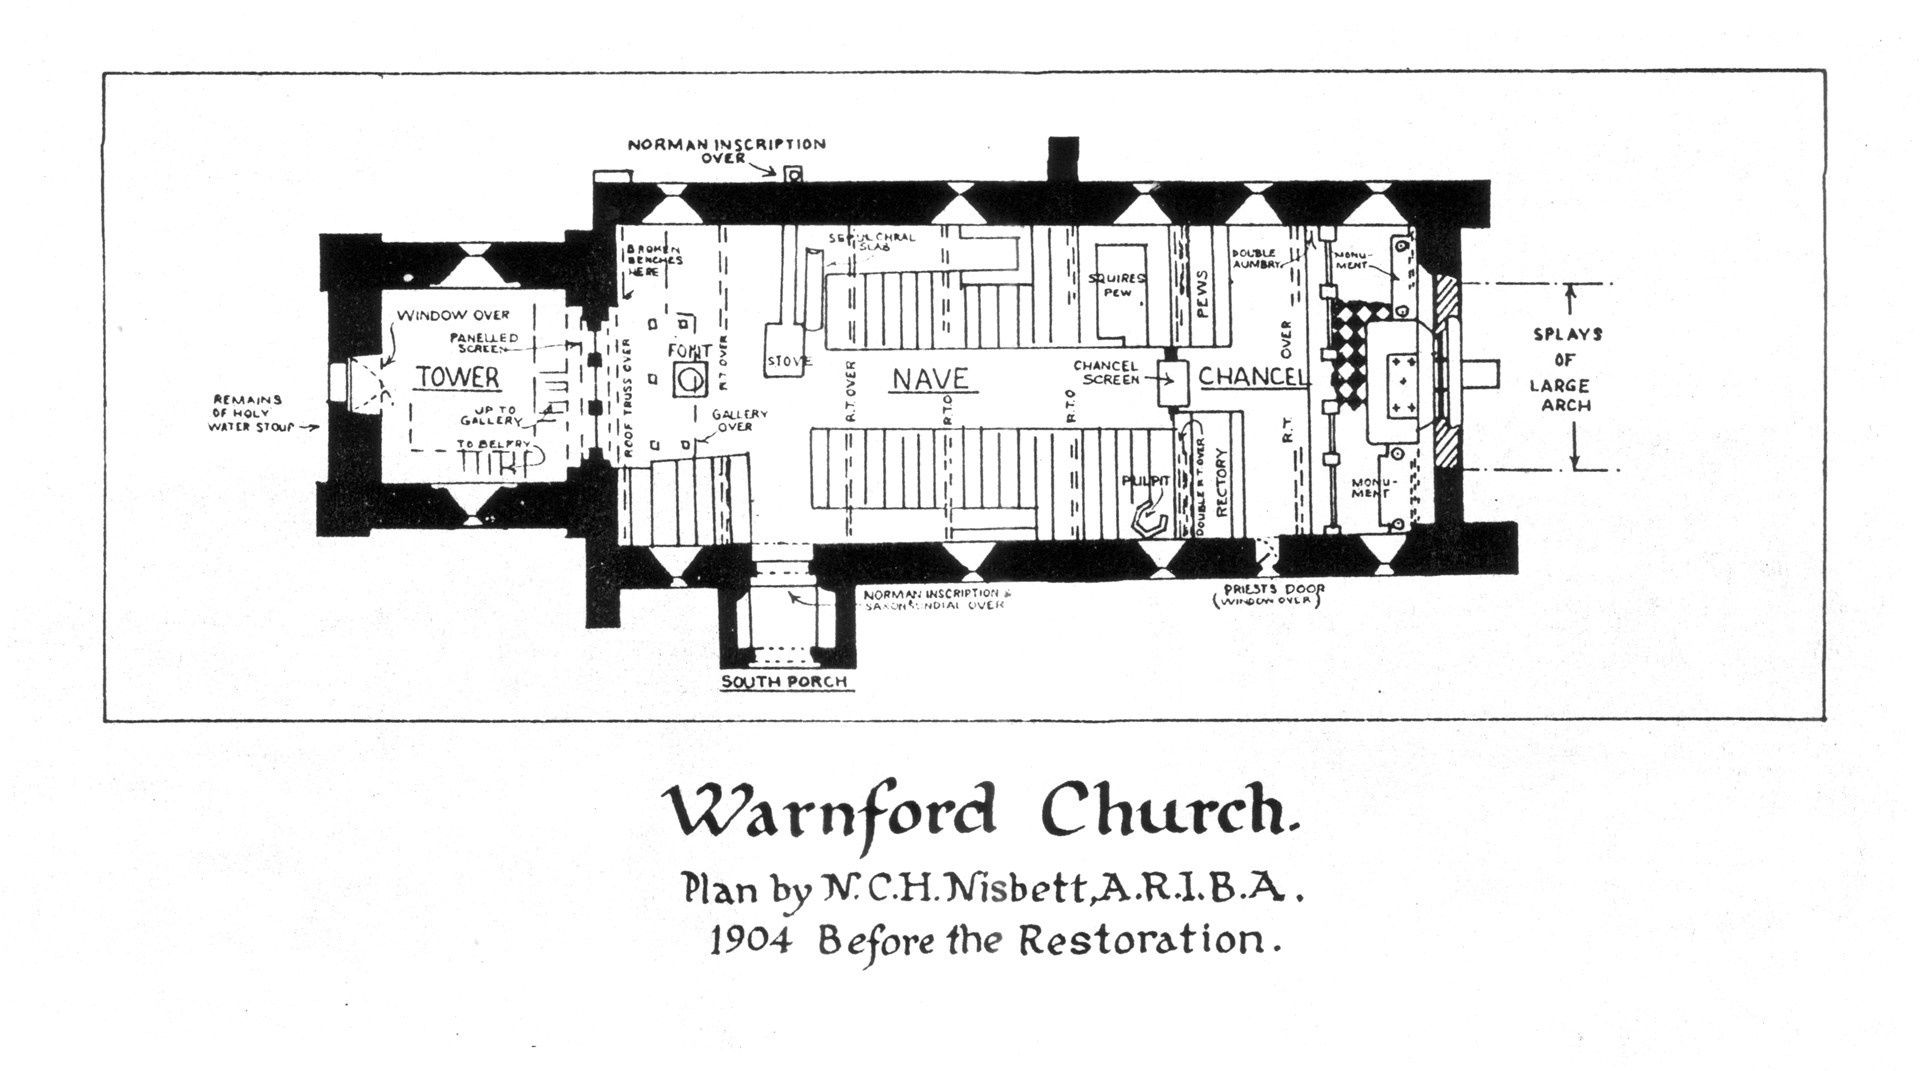 Warnford Church Plan by N.C.H. Nisbett 1904 Before the Restoration